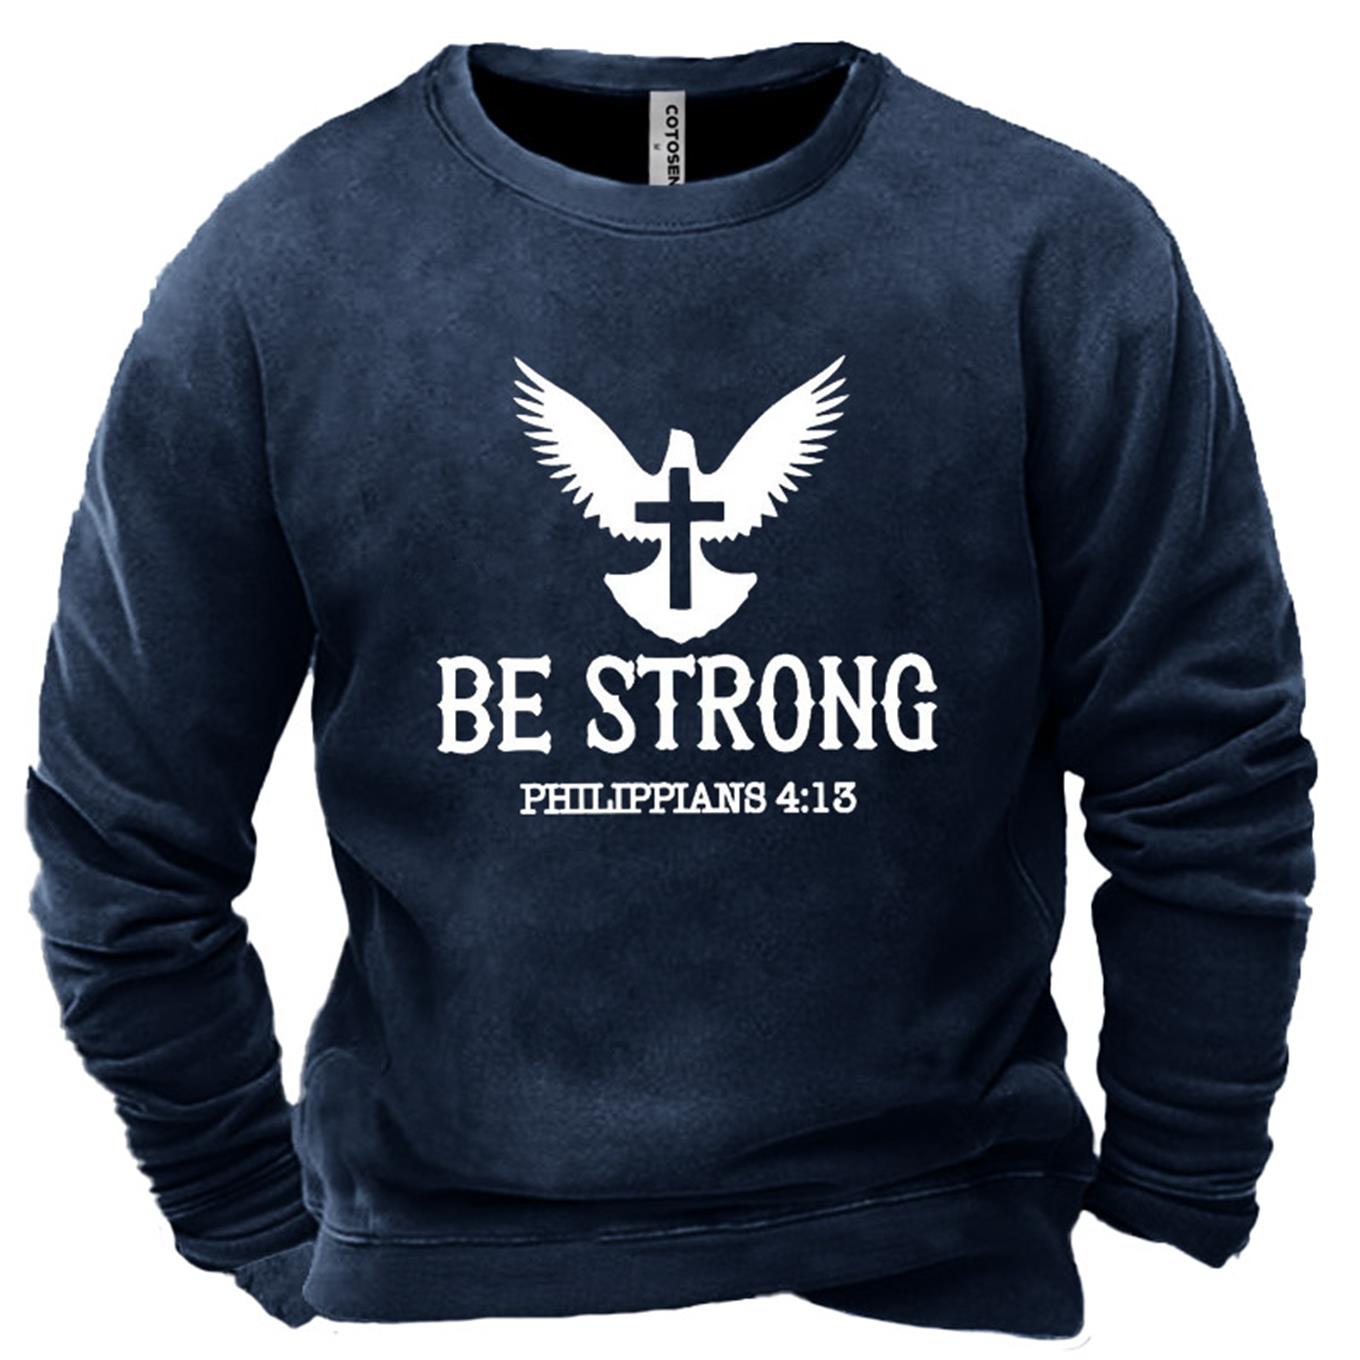 Men's Be Strong Cross Print Chic Sweatshirt